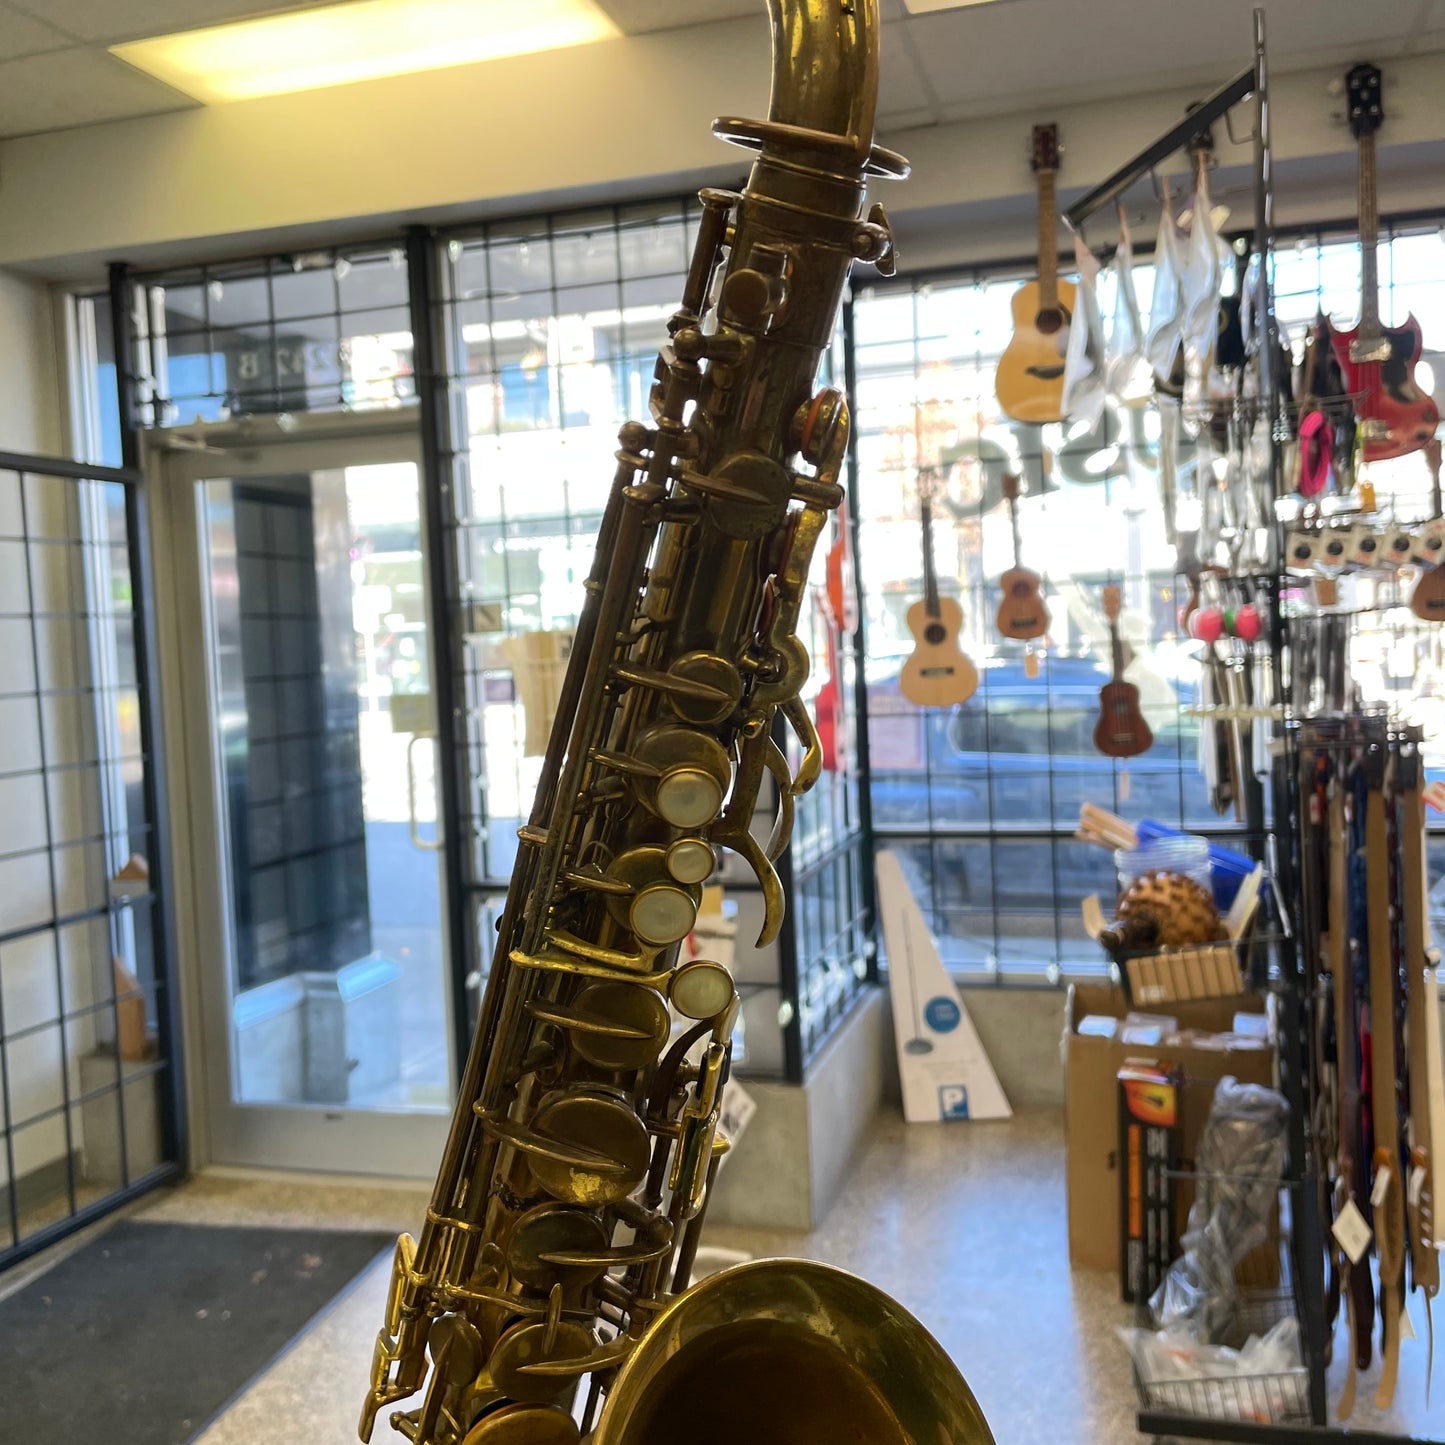 1925 Buescher True-Tone Alto Saxophone